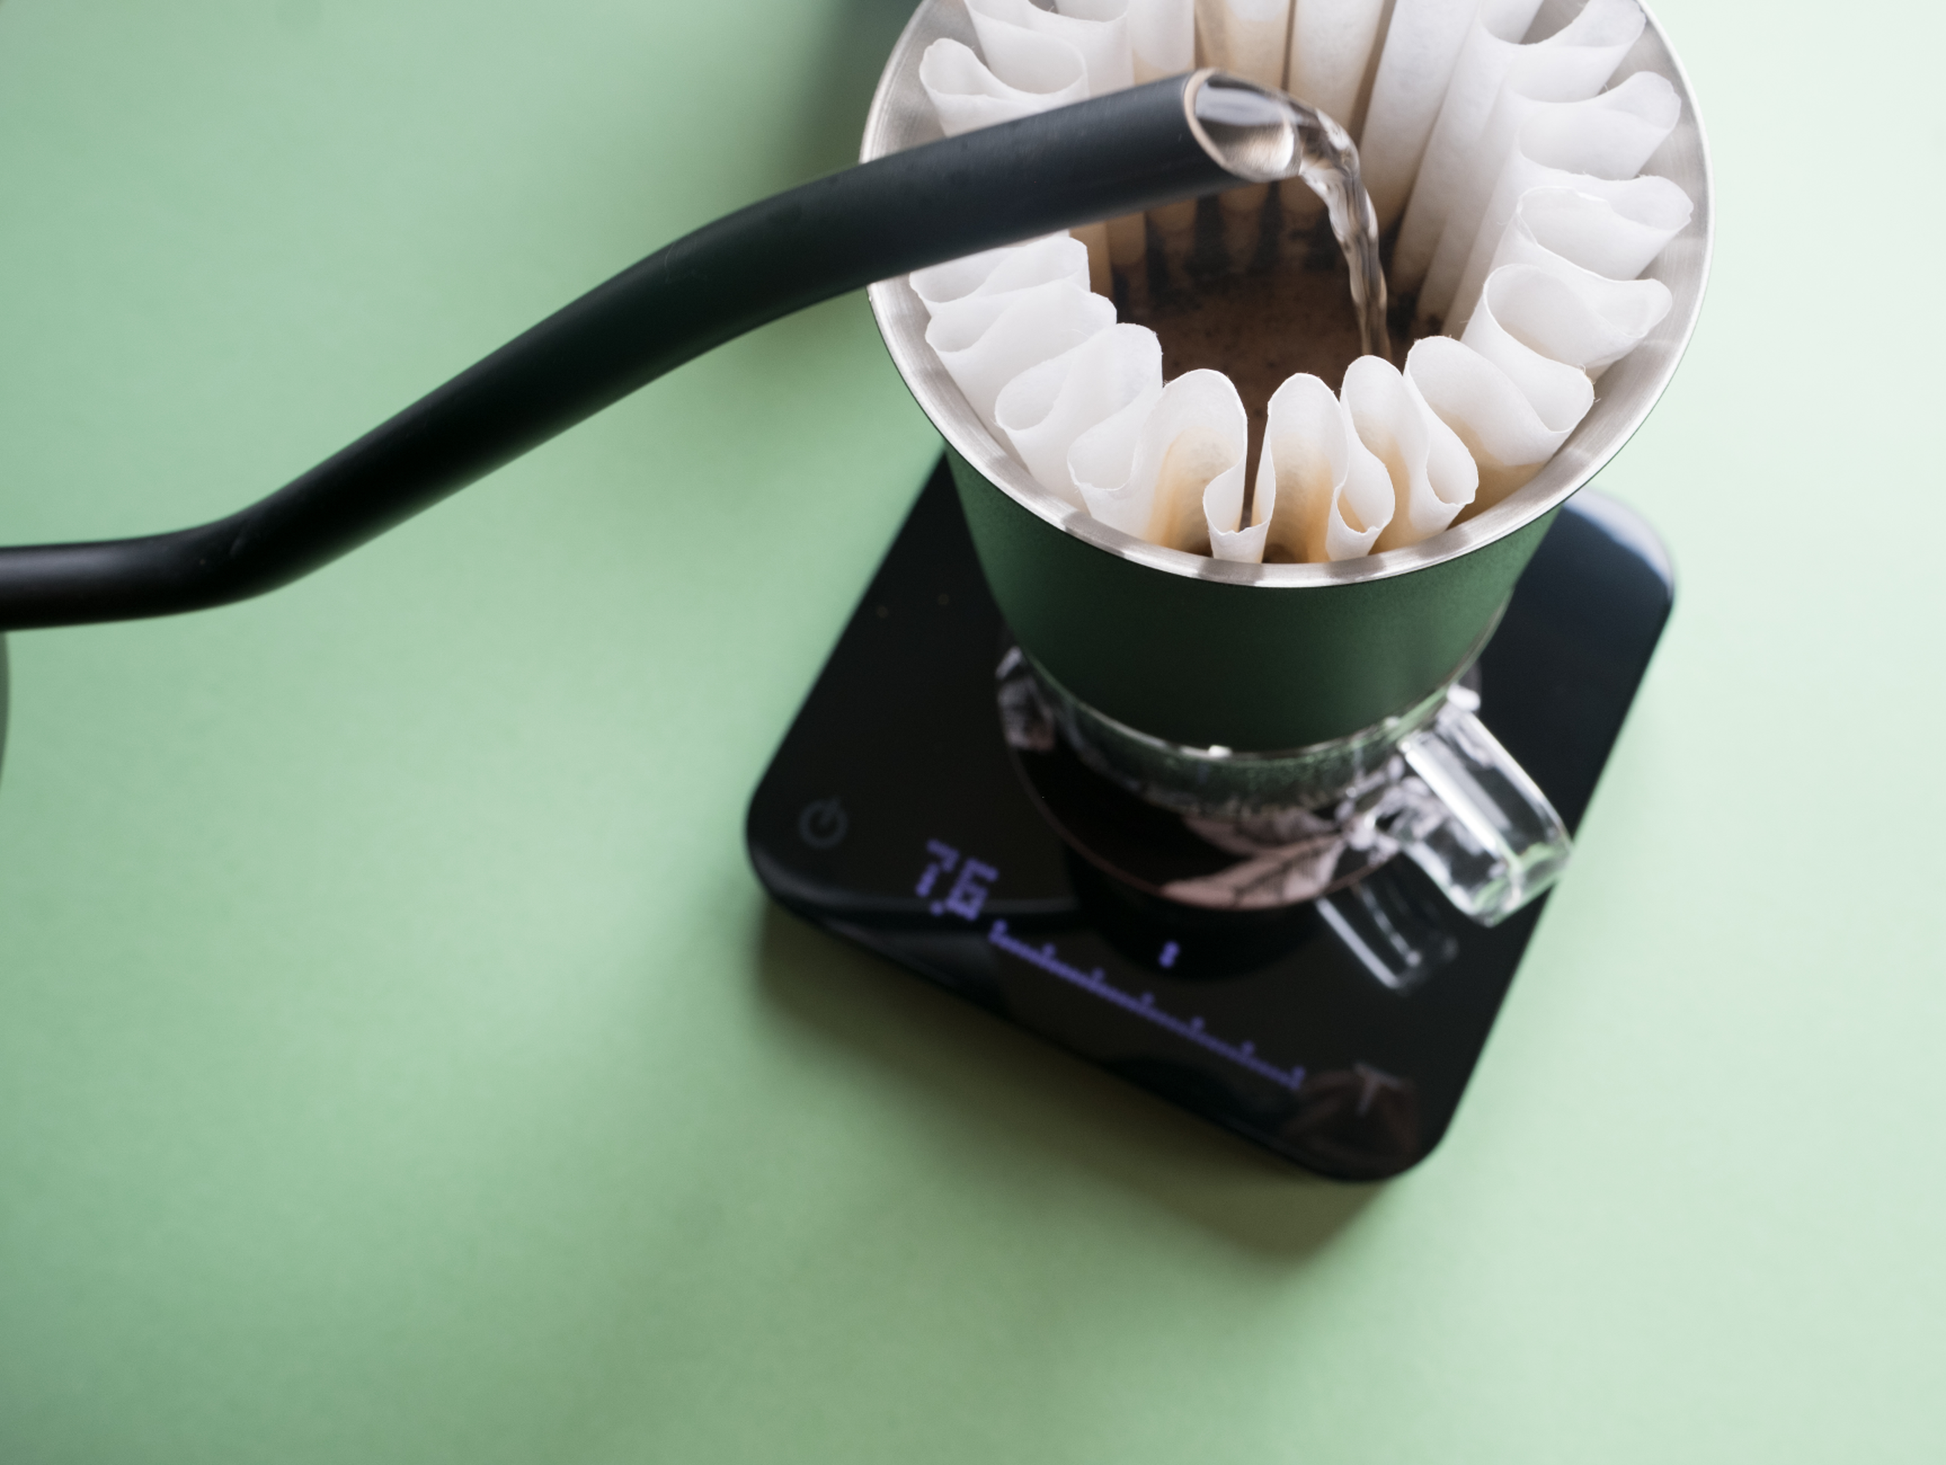 Acaia Pearl Coffee Scale in White – Whole Latte Love